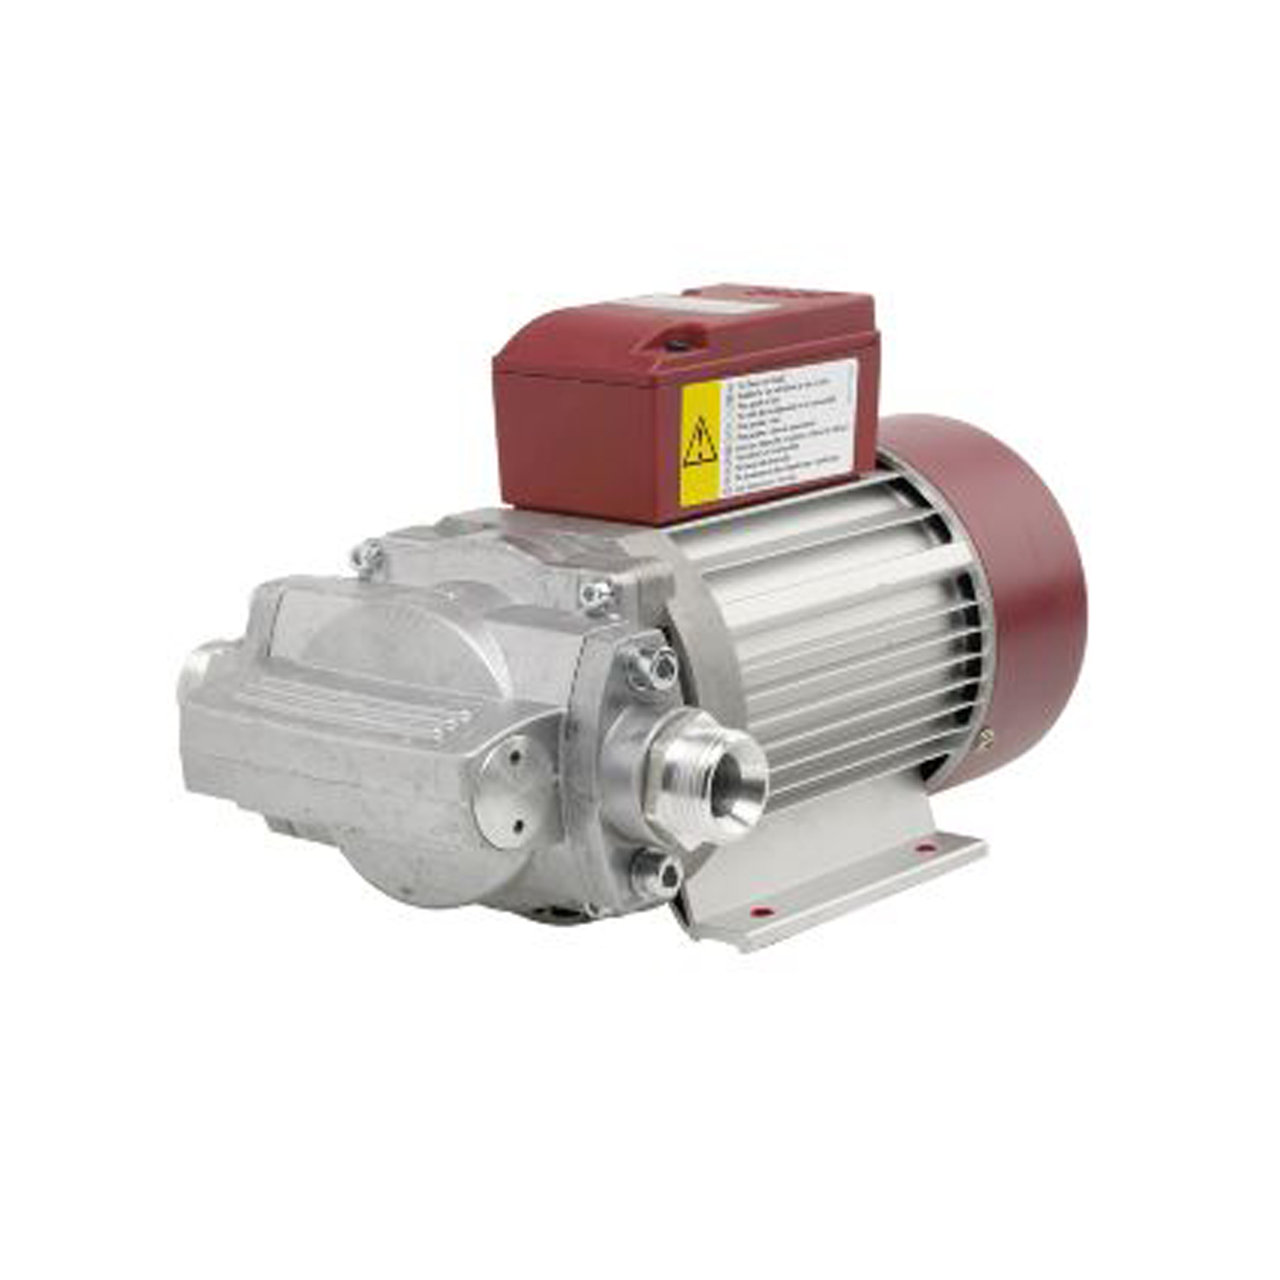 FMT Diesel Transfer Vane Pump 230V, 100lpm - Atkinson Equipment Ltd